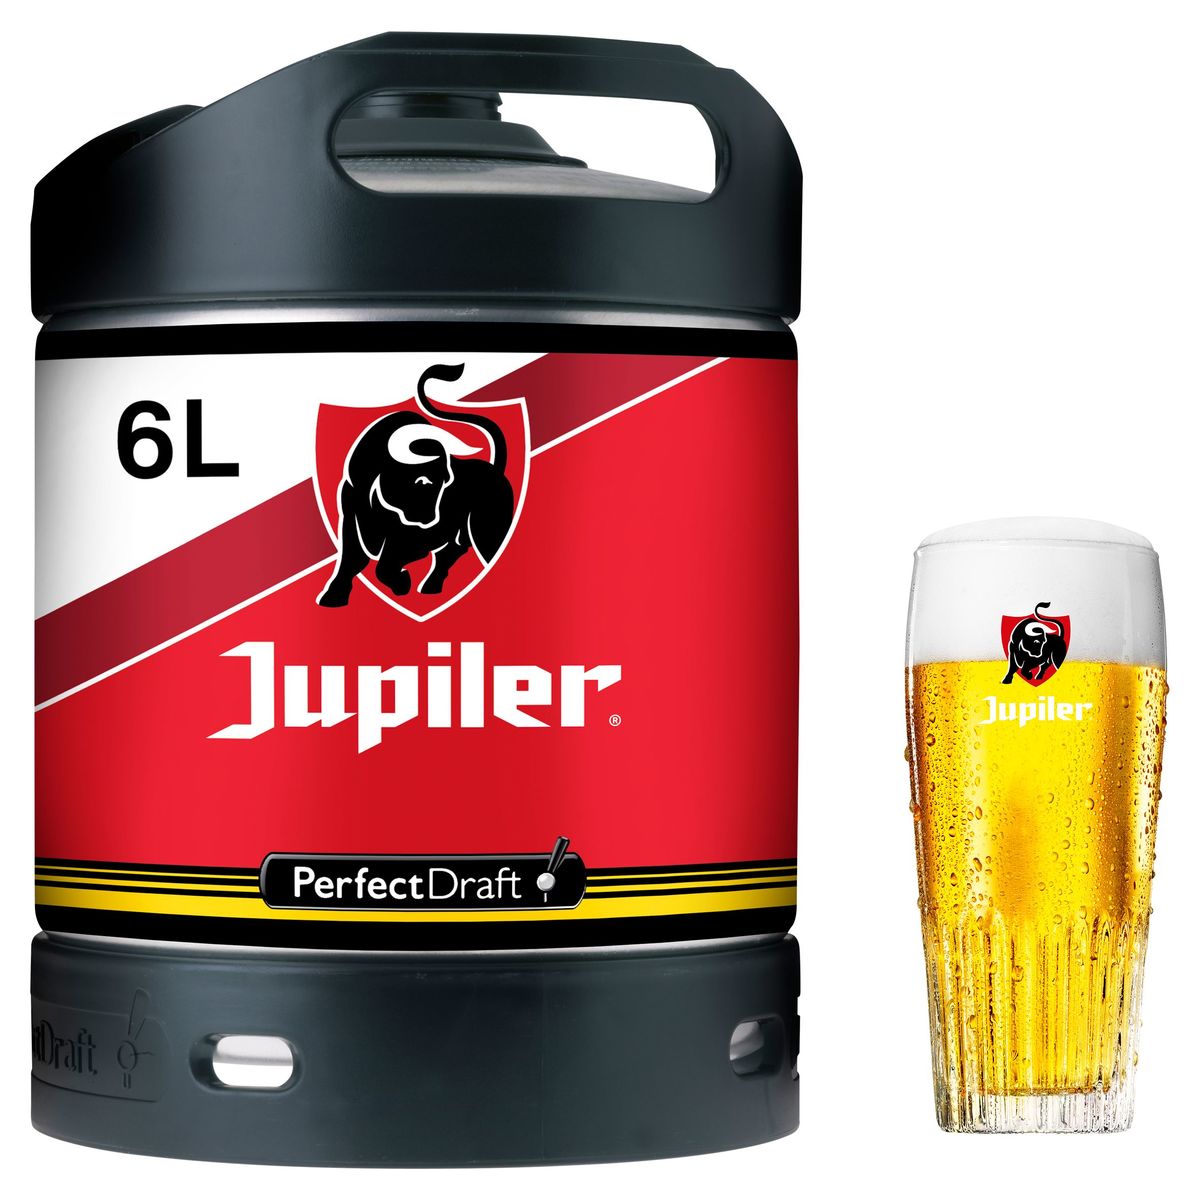 Jupiler Fut De Biere Perfect Draft 6L - Belgian Brewed